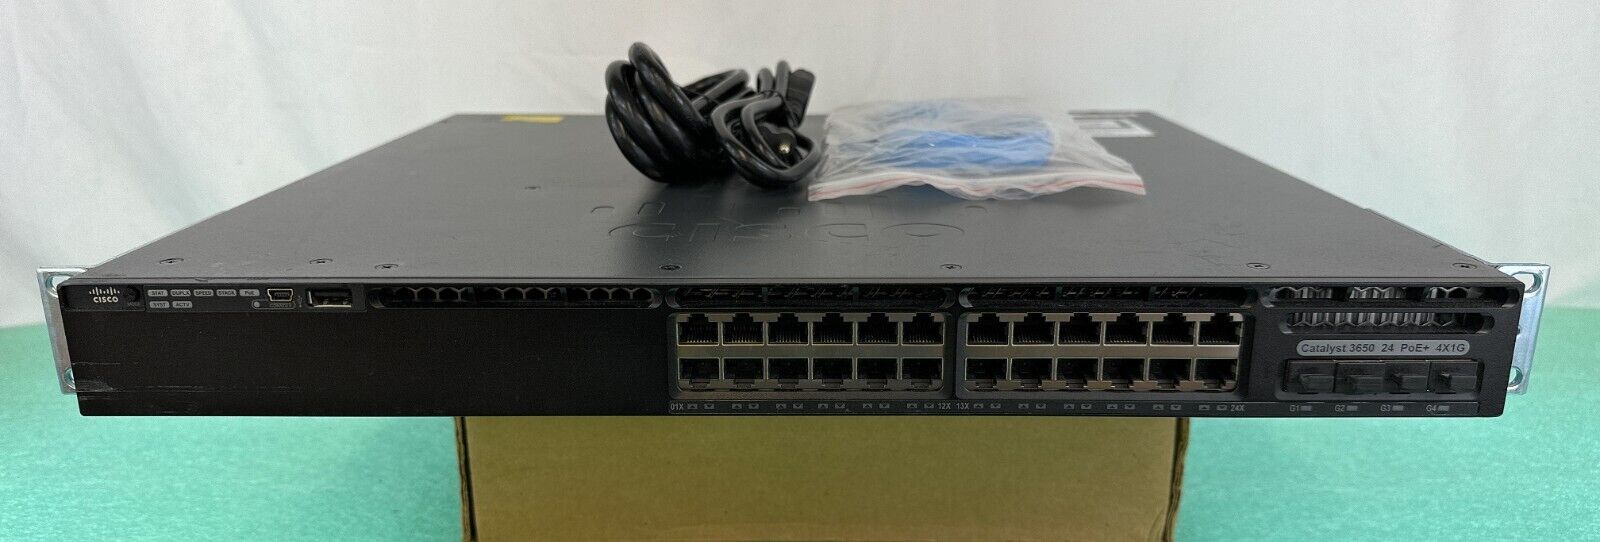 Cisco WS-C3650-24PS-E 24-Port PoE+ Gigabit IP Services Switch Dual Power Supply